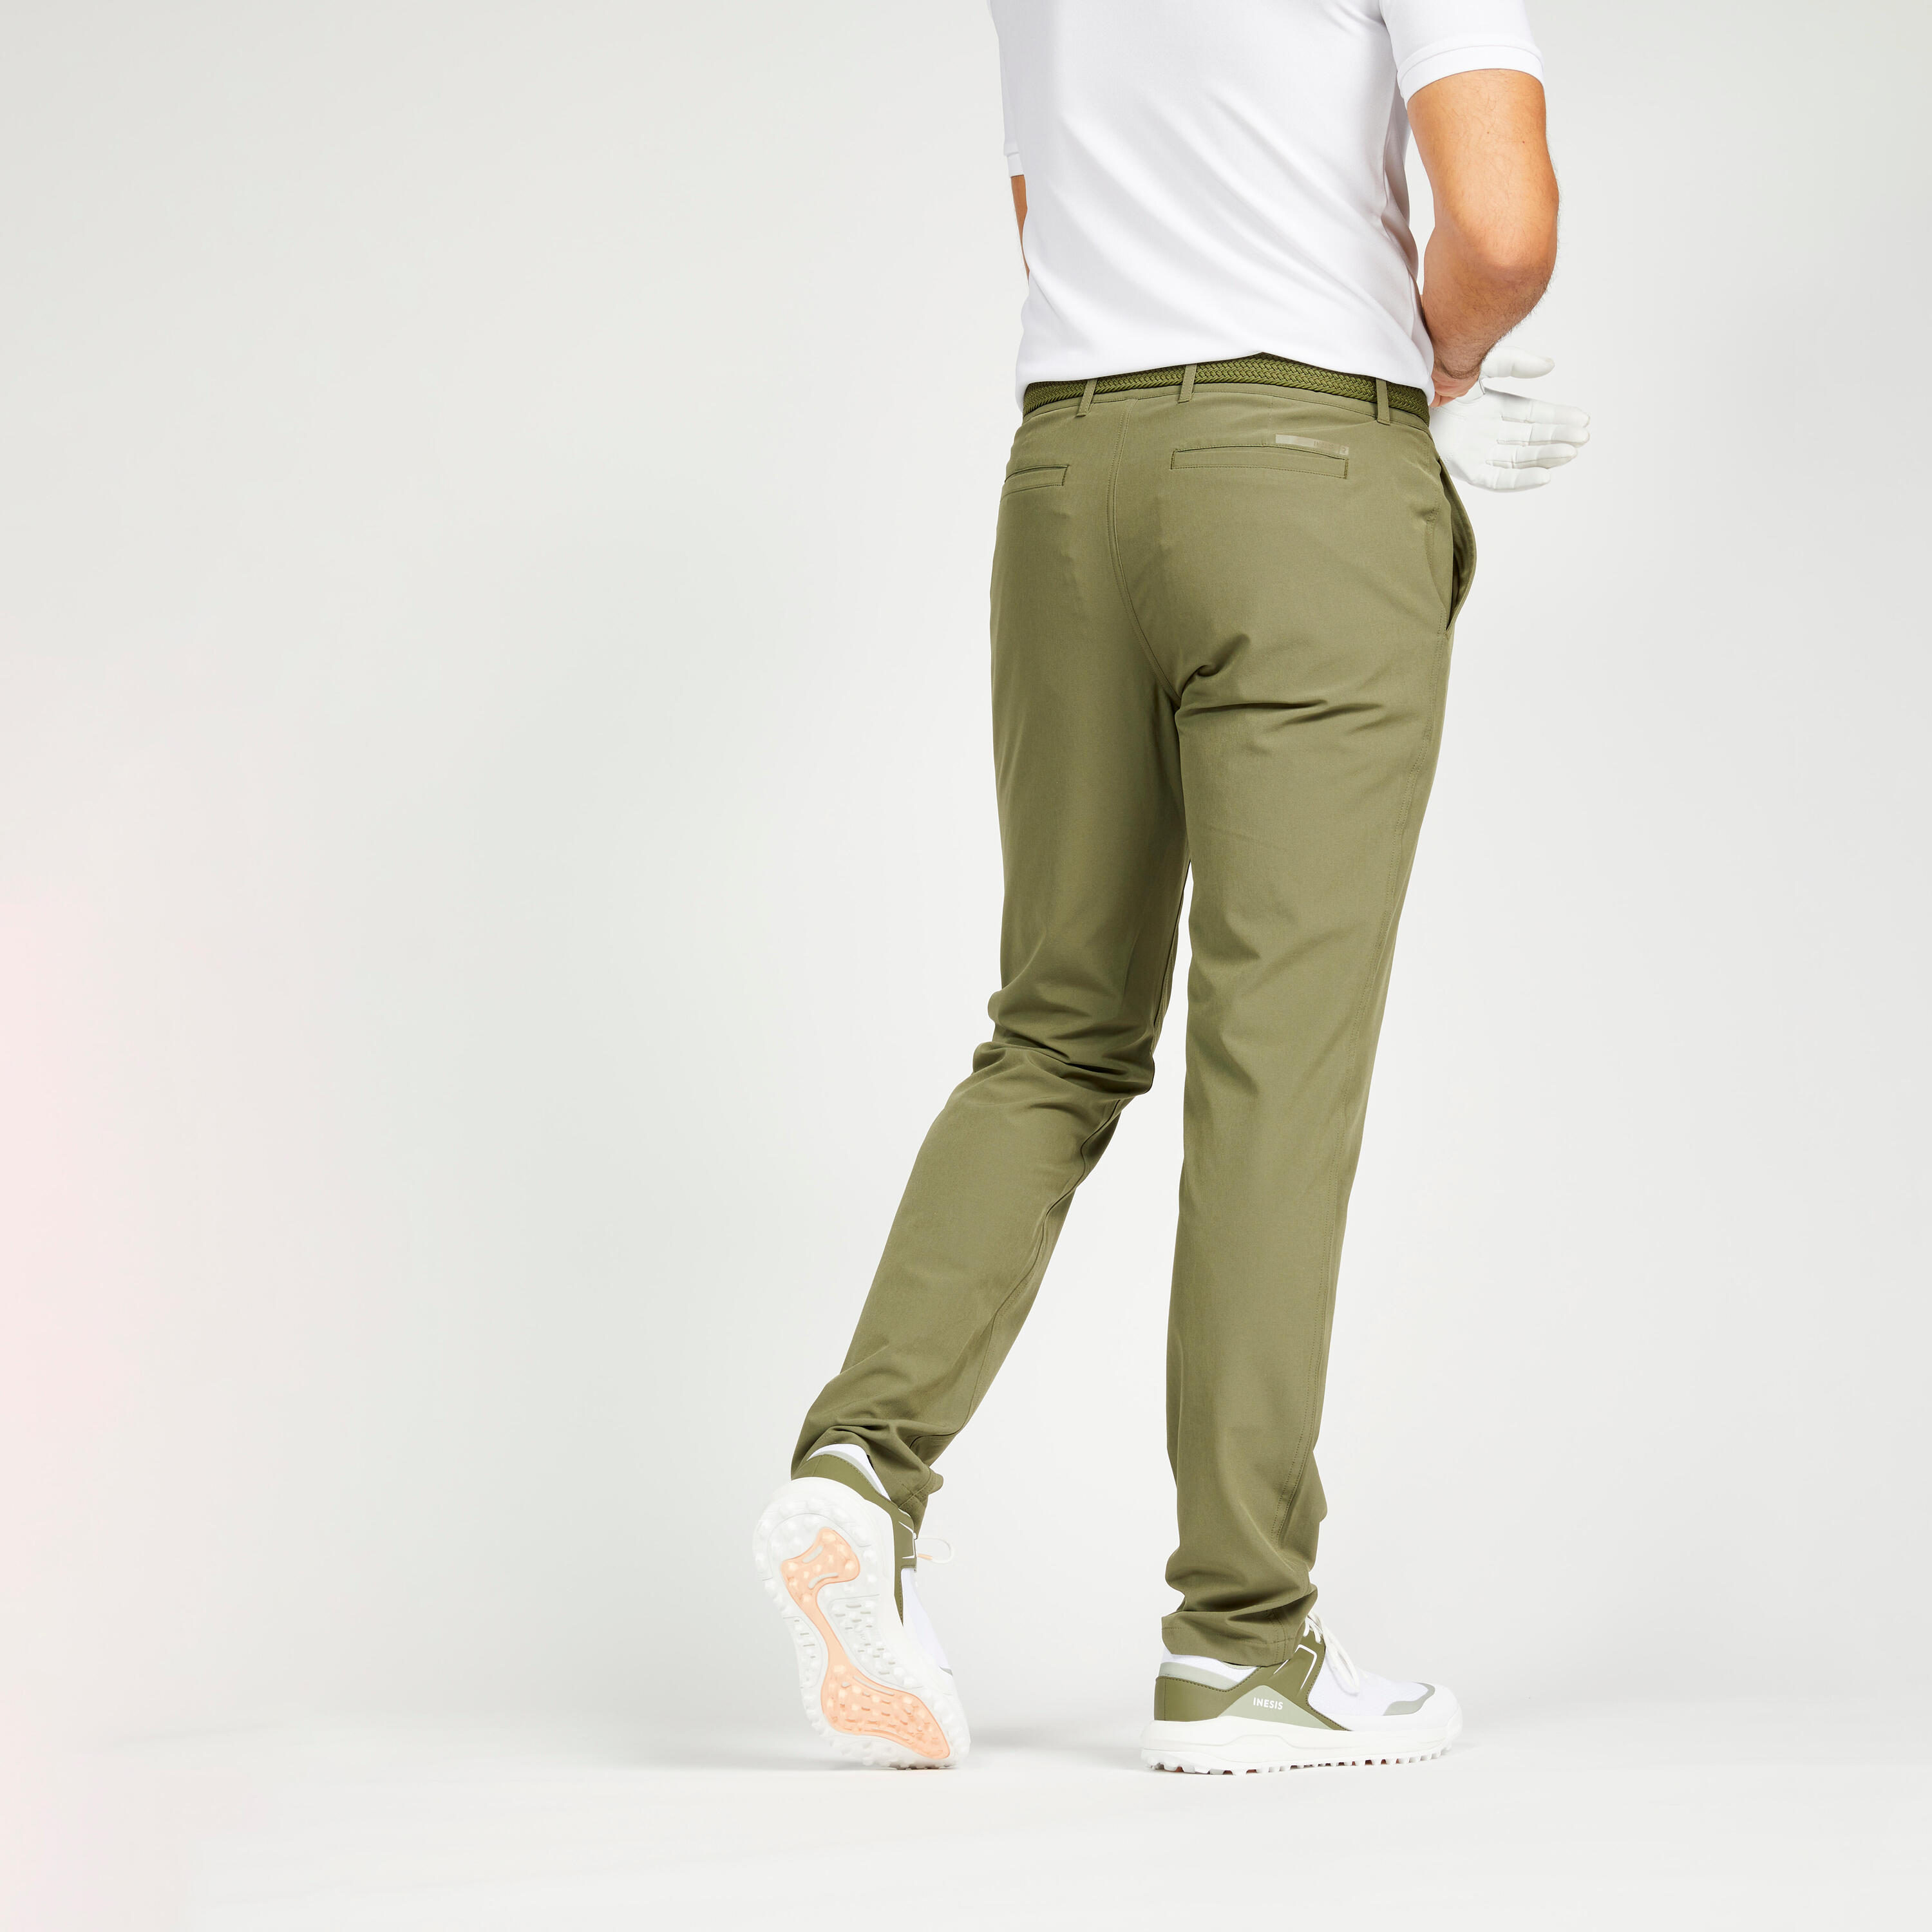 Men's golf trousers - WW 500 khaki 2/4